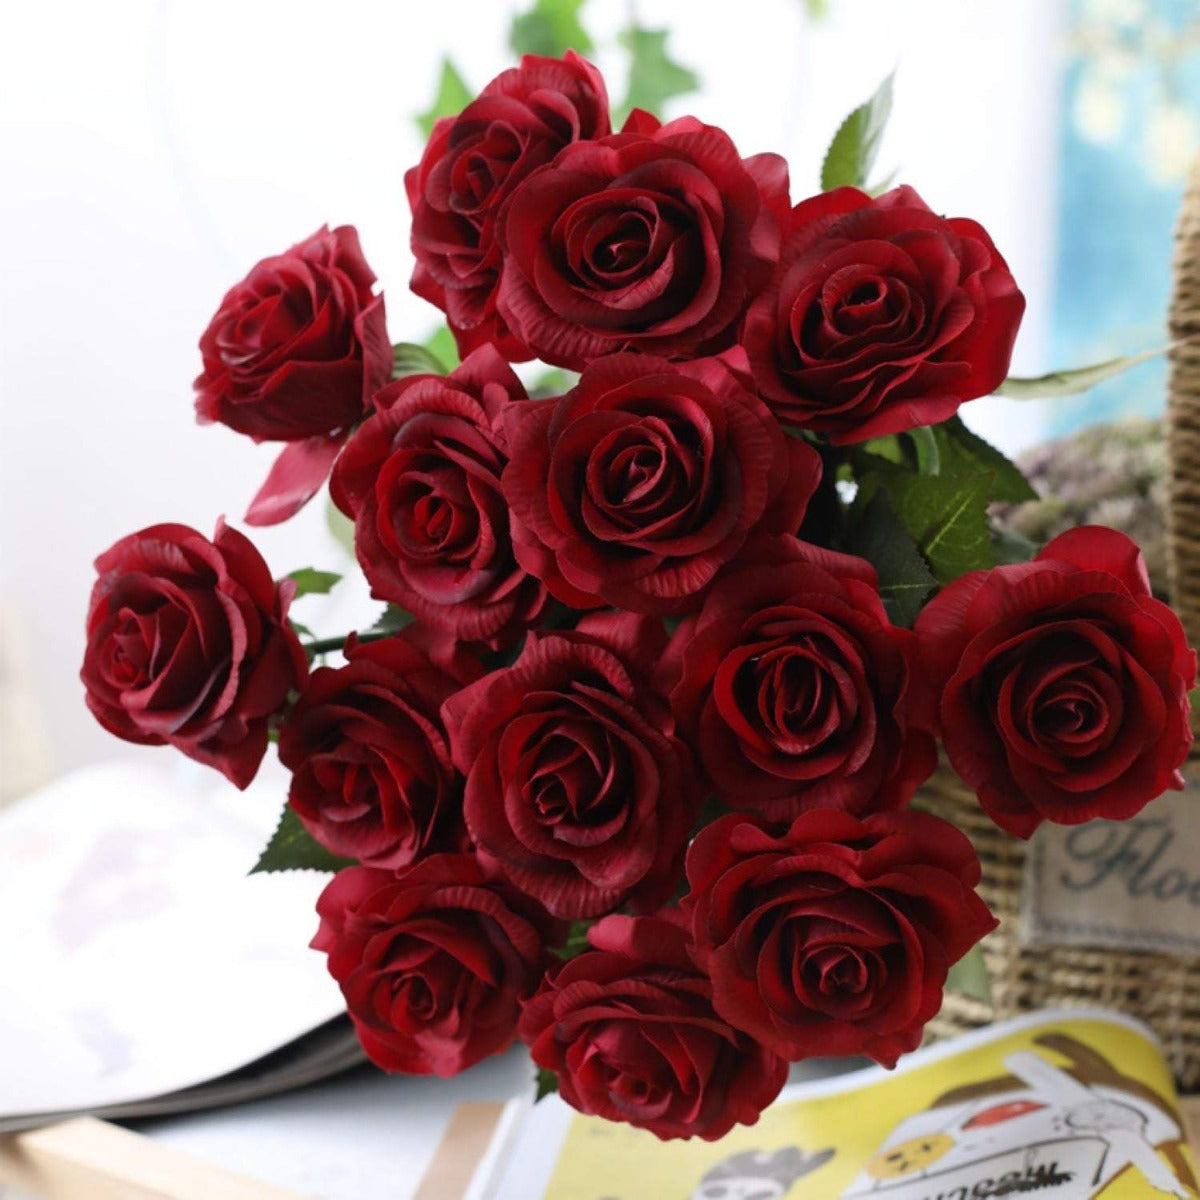 VANRIN Dark Red Roses Real Touch Flowers Burgundy 